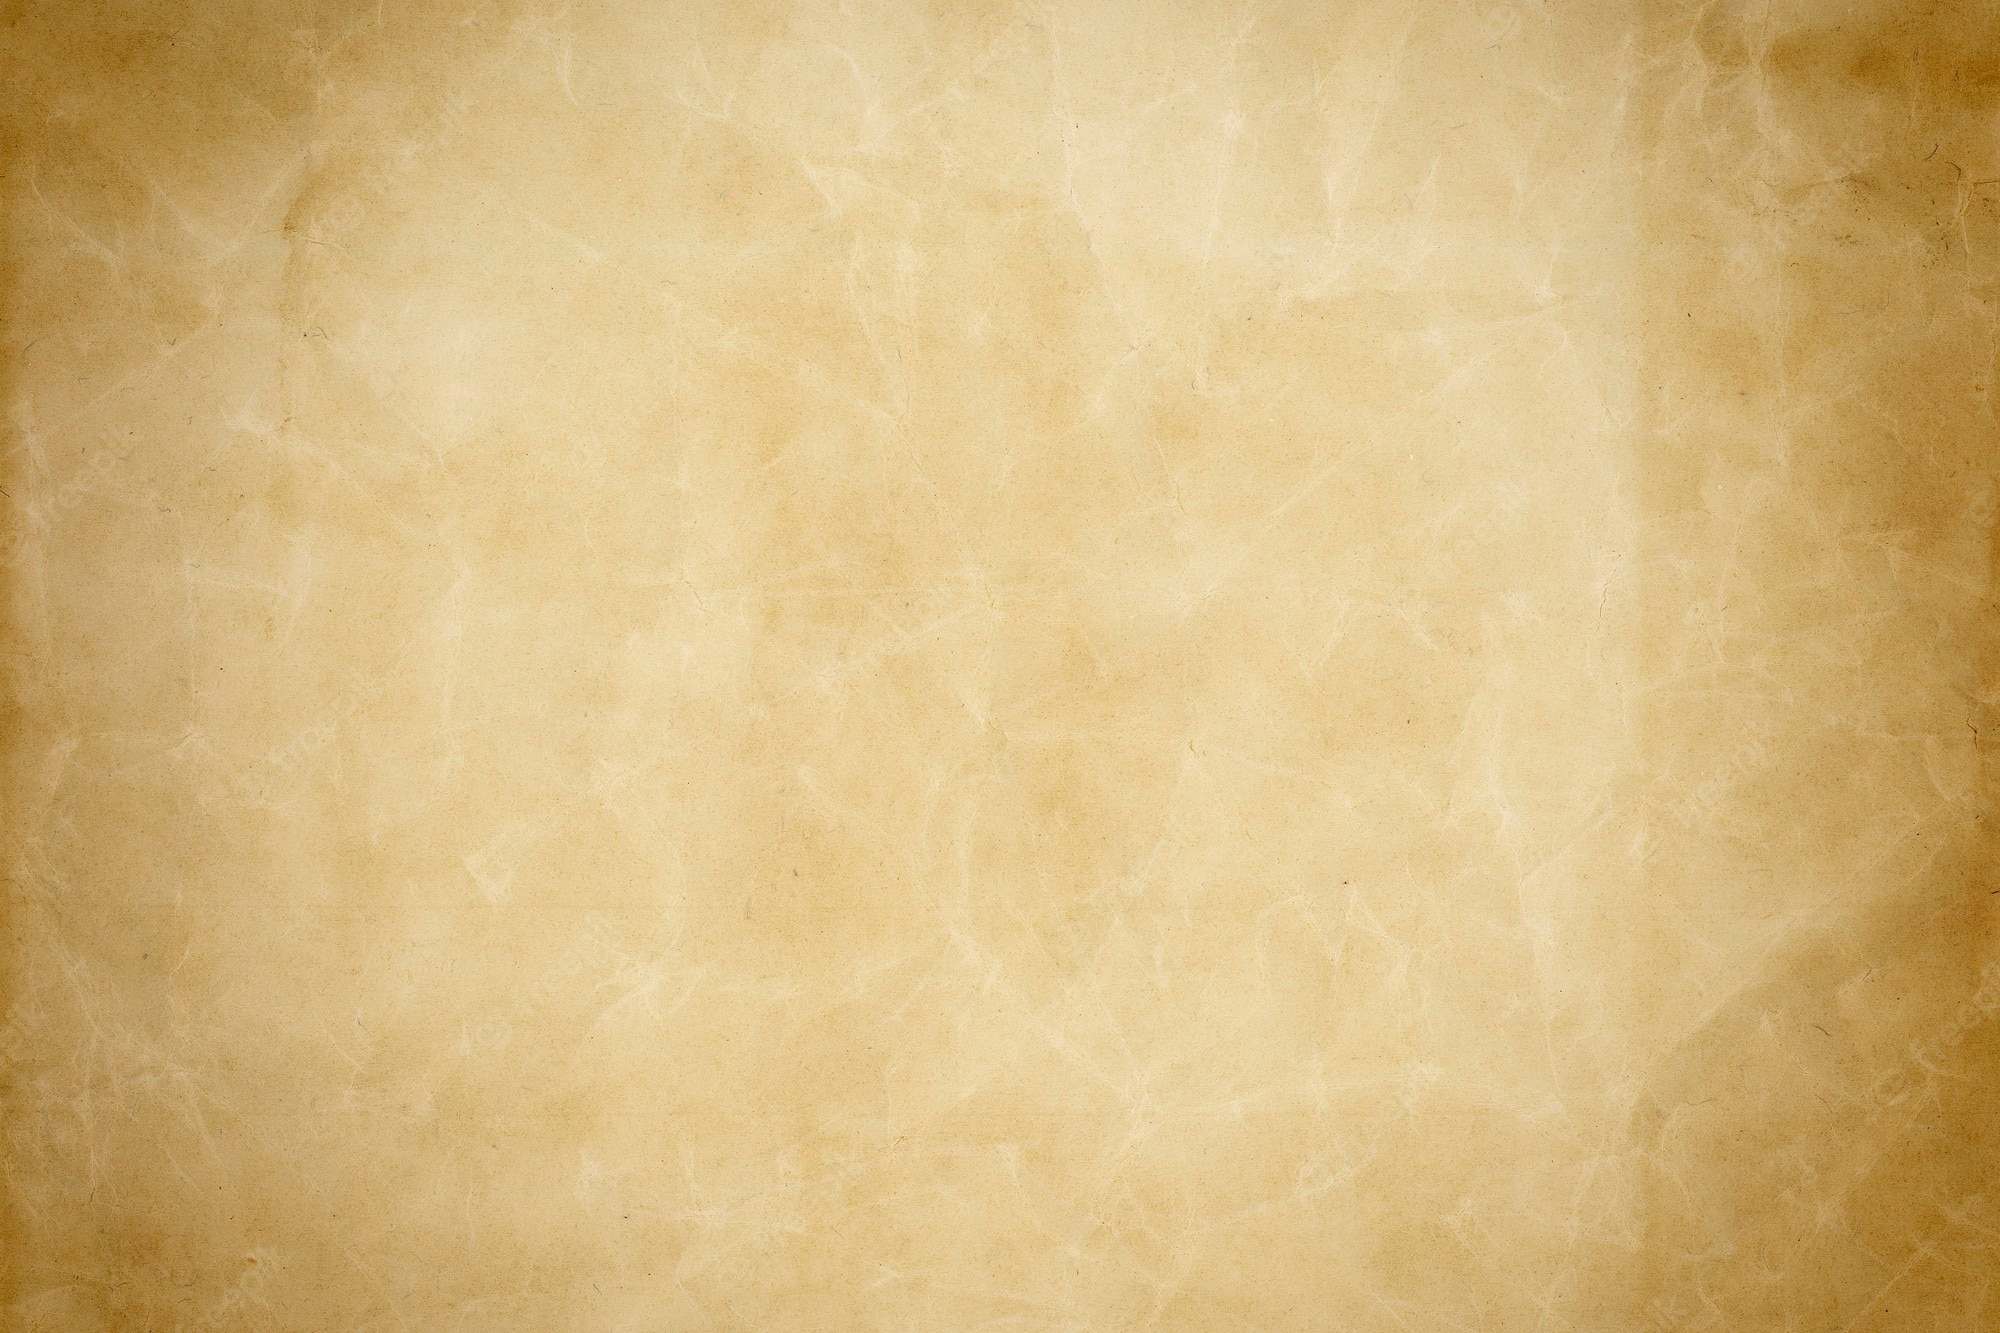 Free Parchment Background